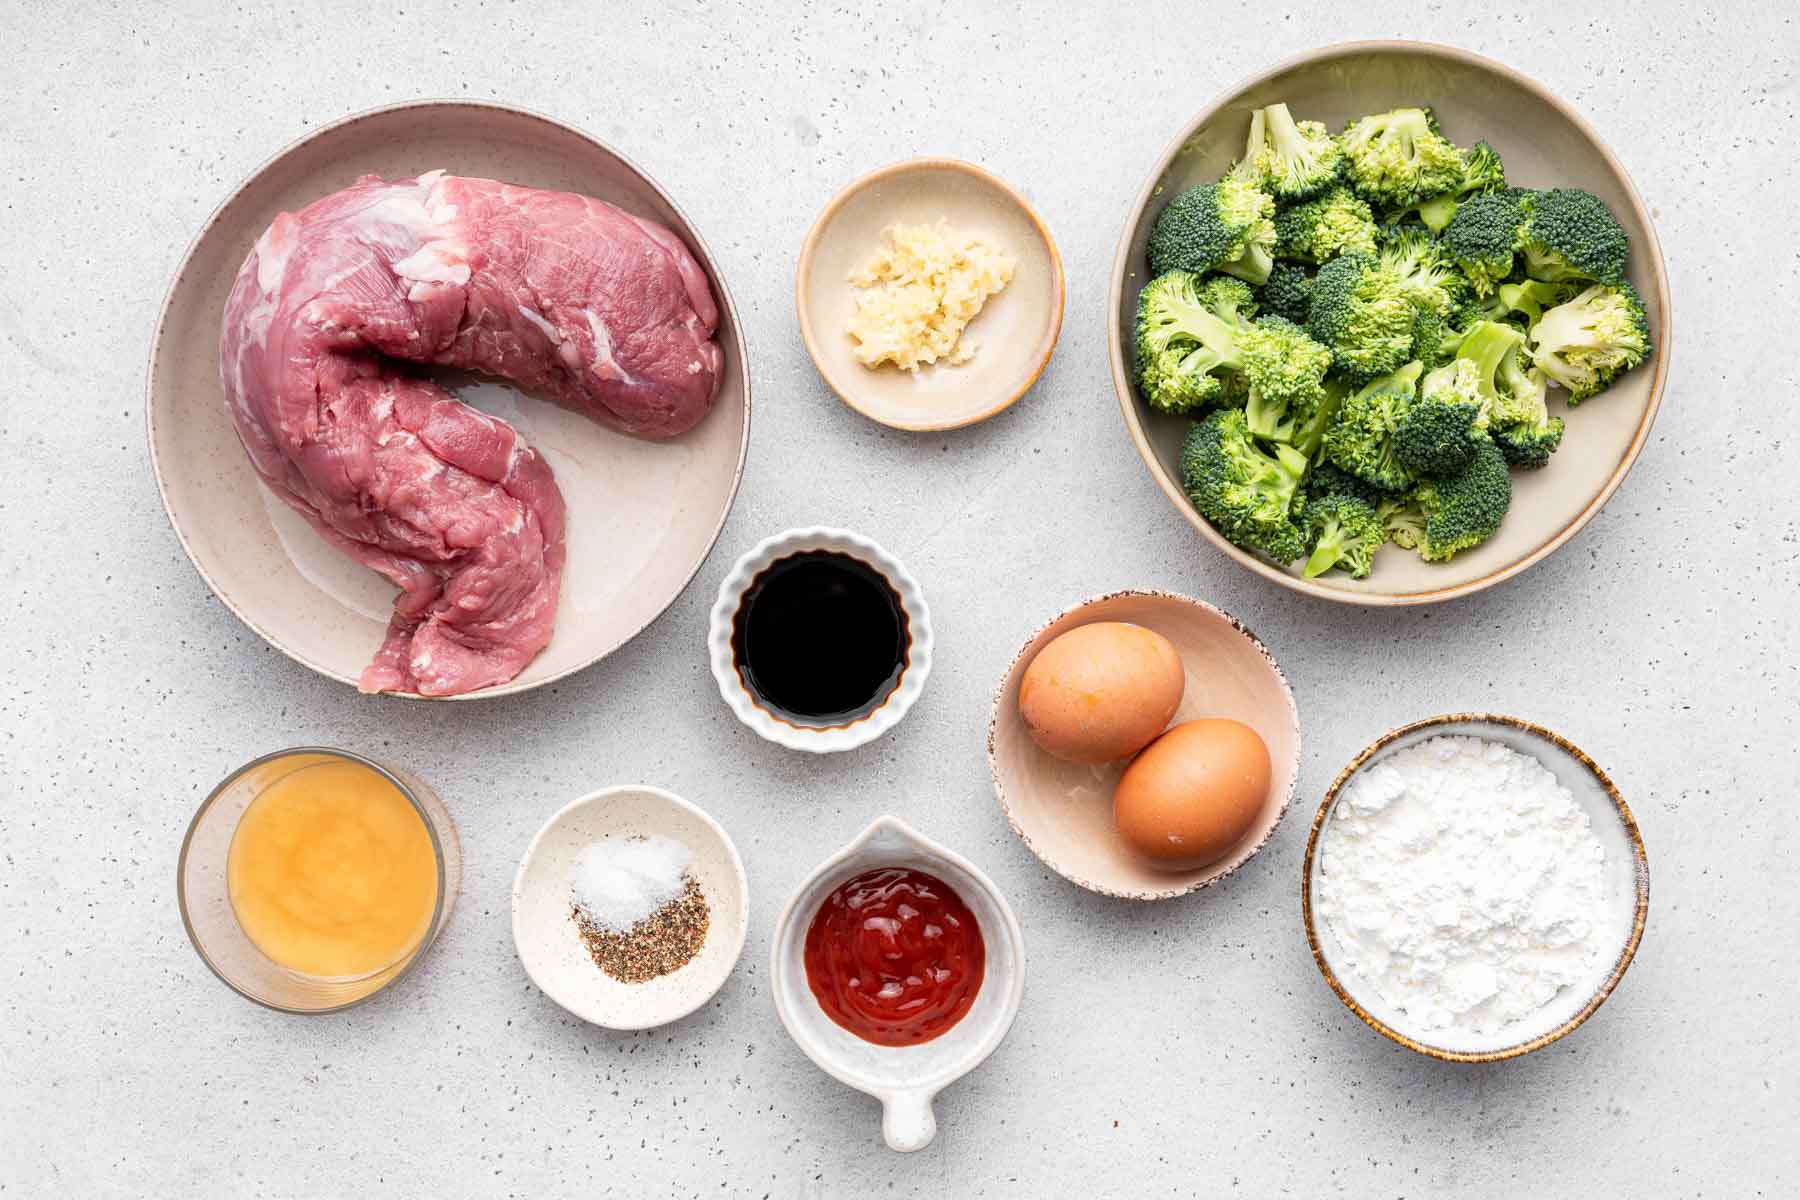 Small bowls of broccoli, egg, cornstarch, and pork tenderloin on light grey counter.